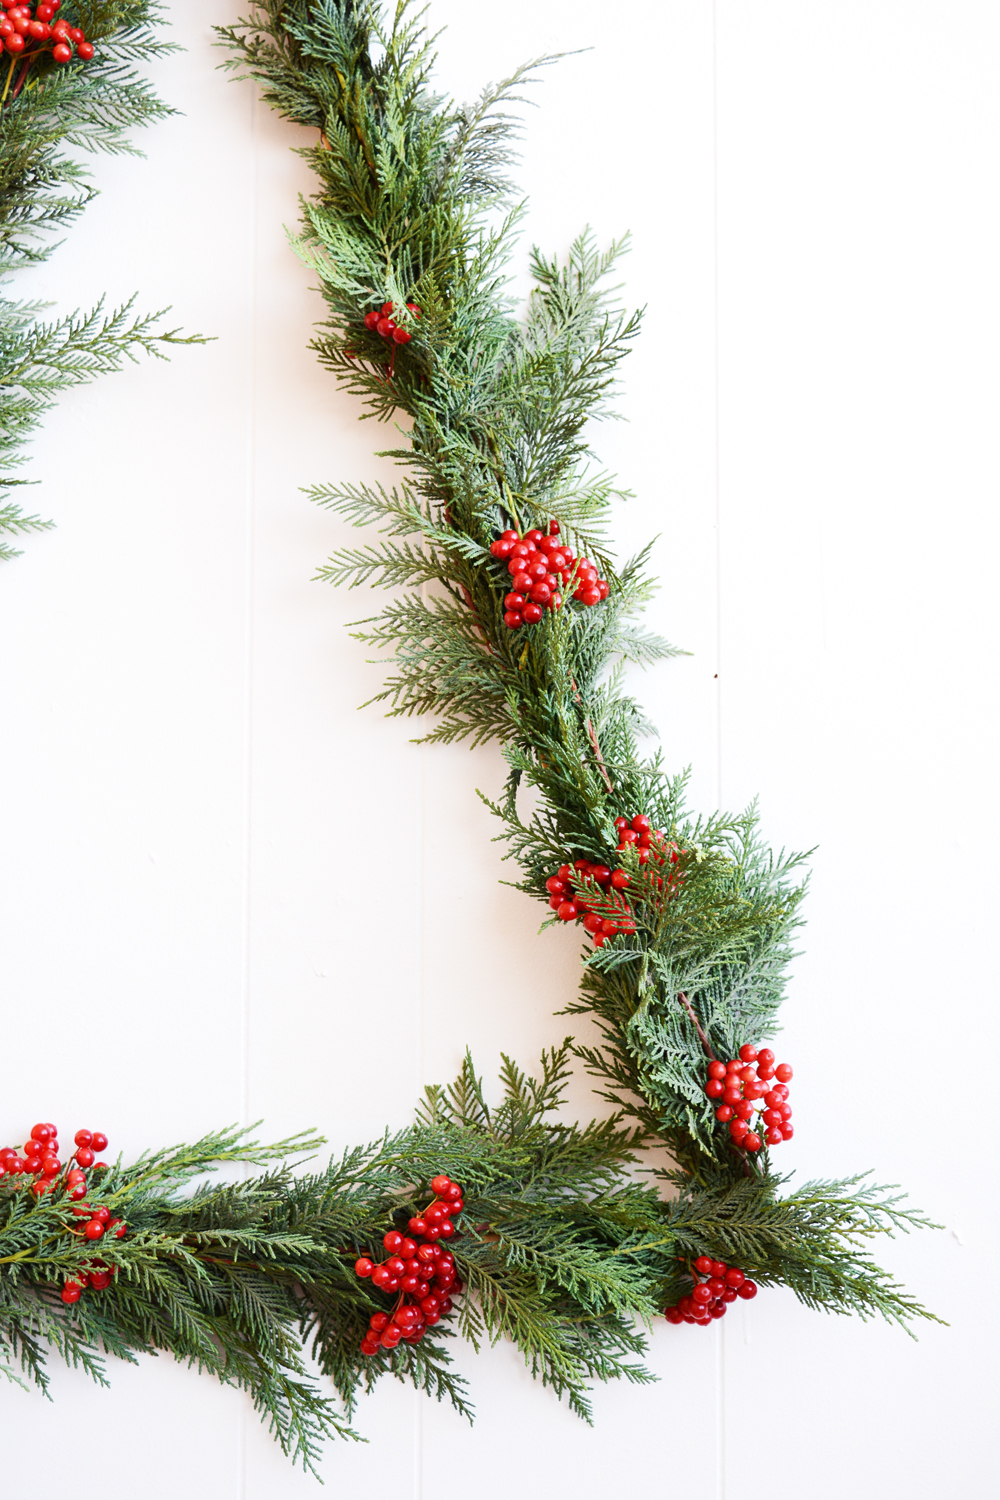 DIY Modern Triangle Wall Christmas Tree